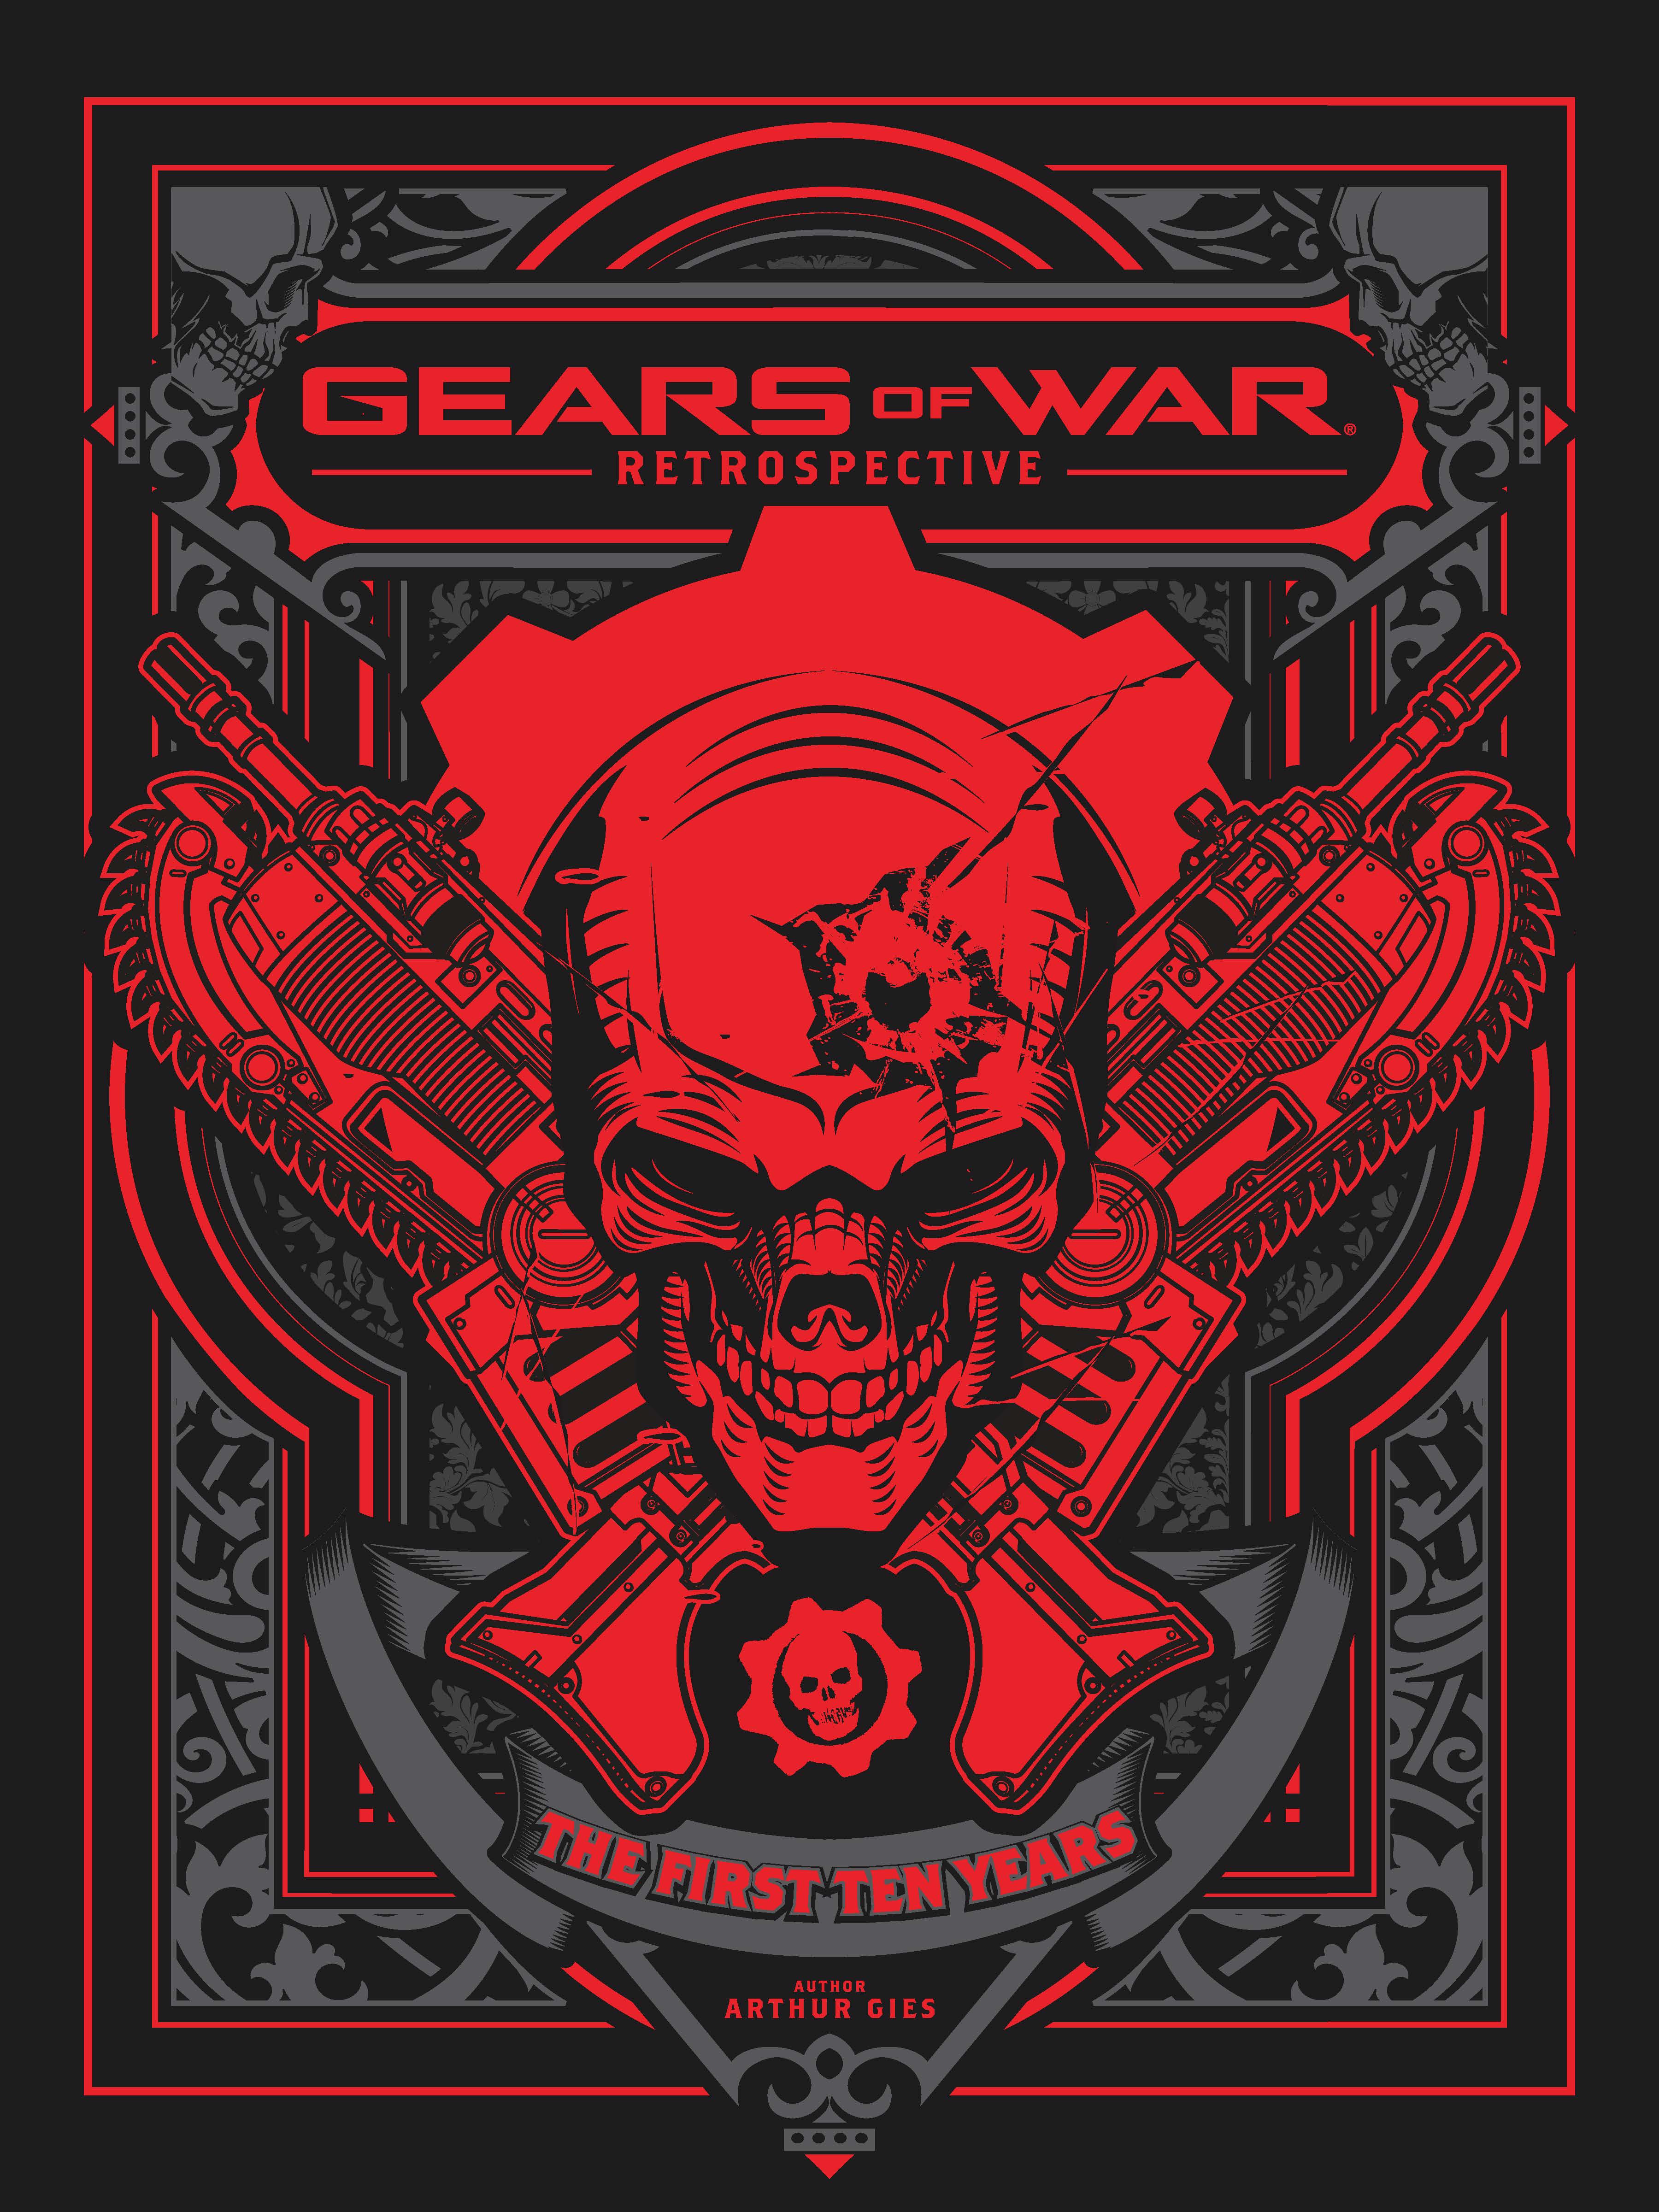 Comics/Books: BOOK REVIEW: The Art of Gears of War 3